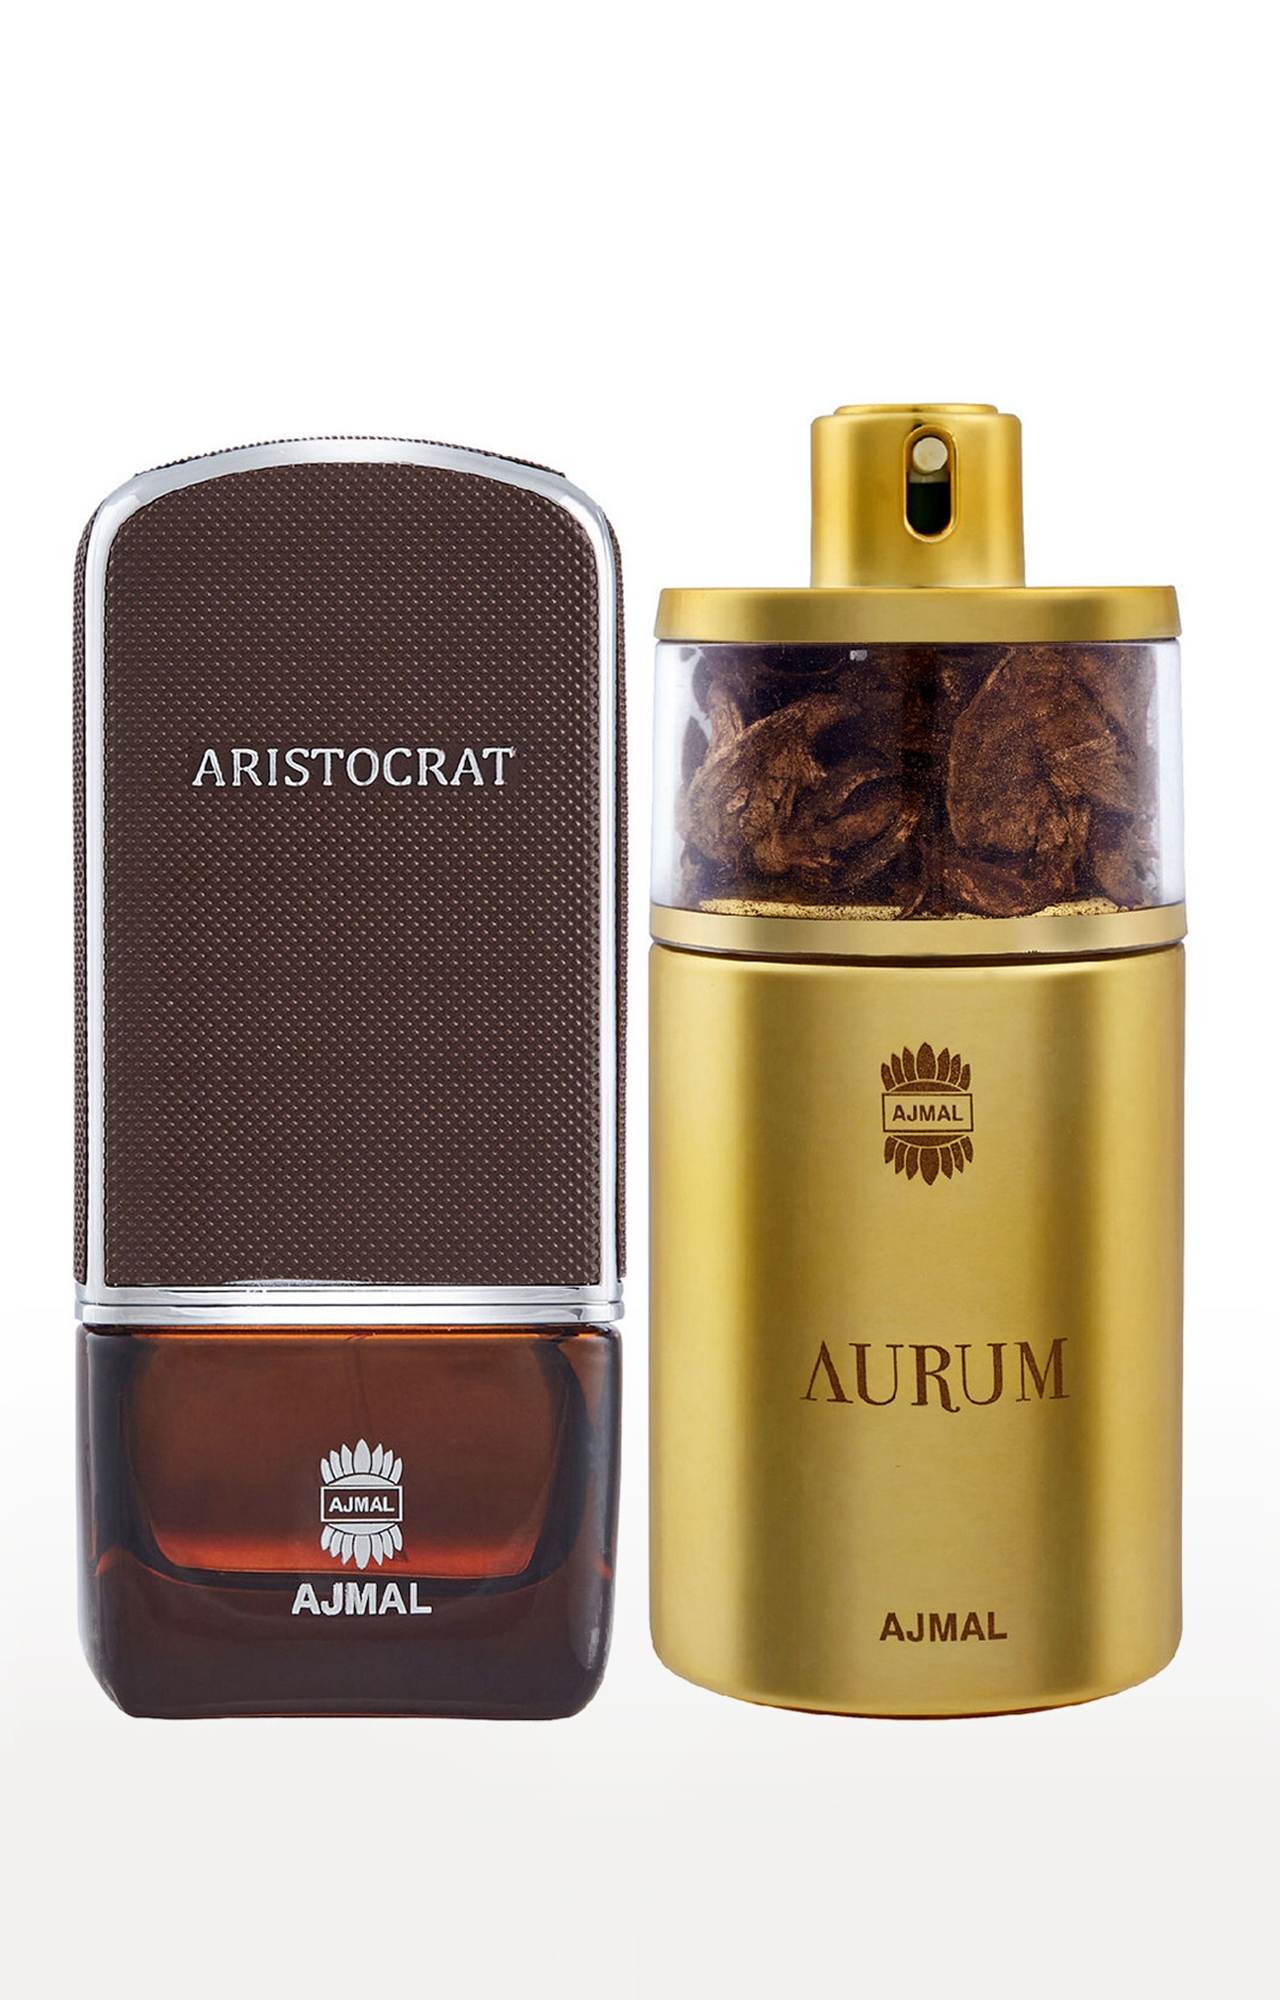 Ajmal Aristocrat EDP Perfume 75ml for Men and Aurum EDP Fruity Perfume 75ml for Women